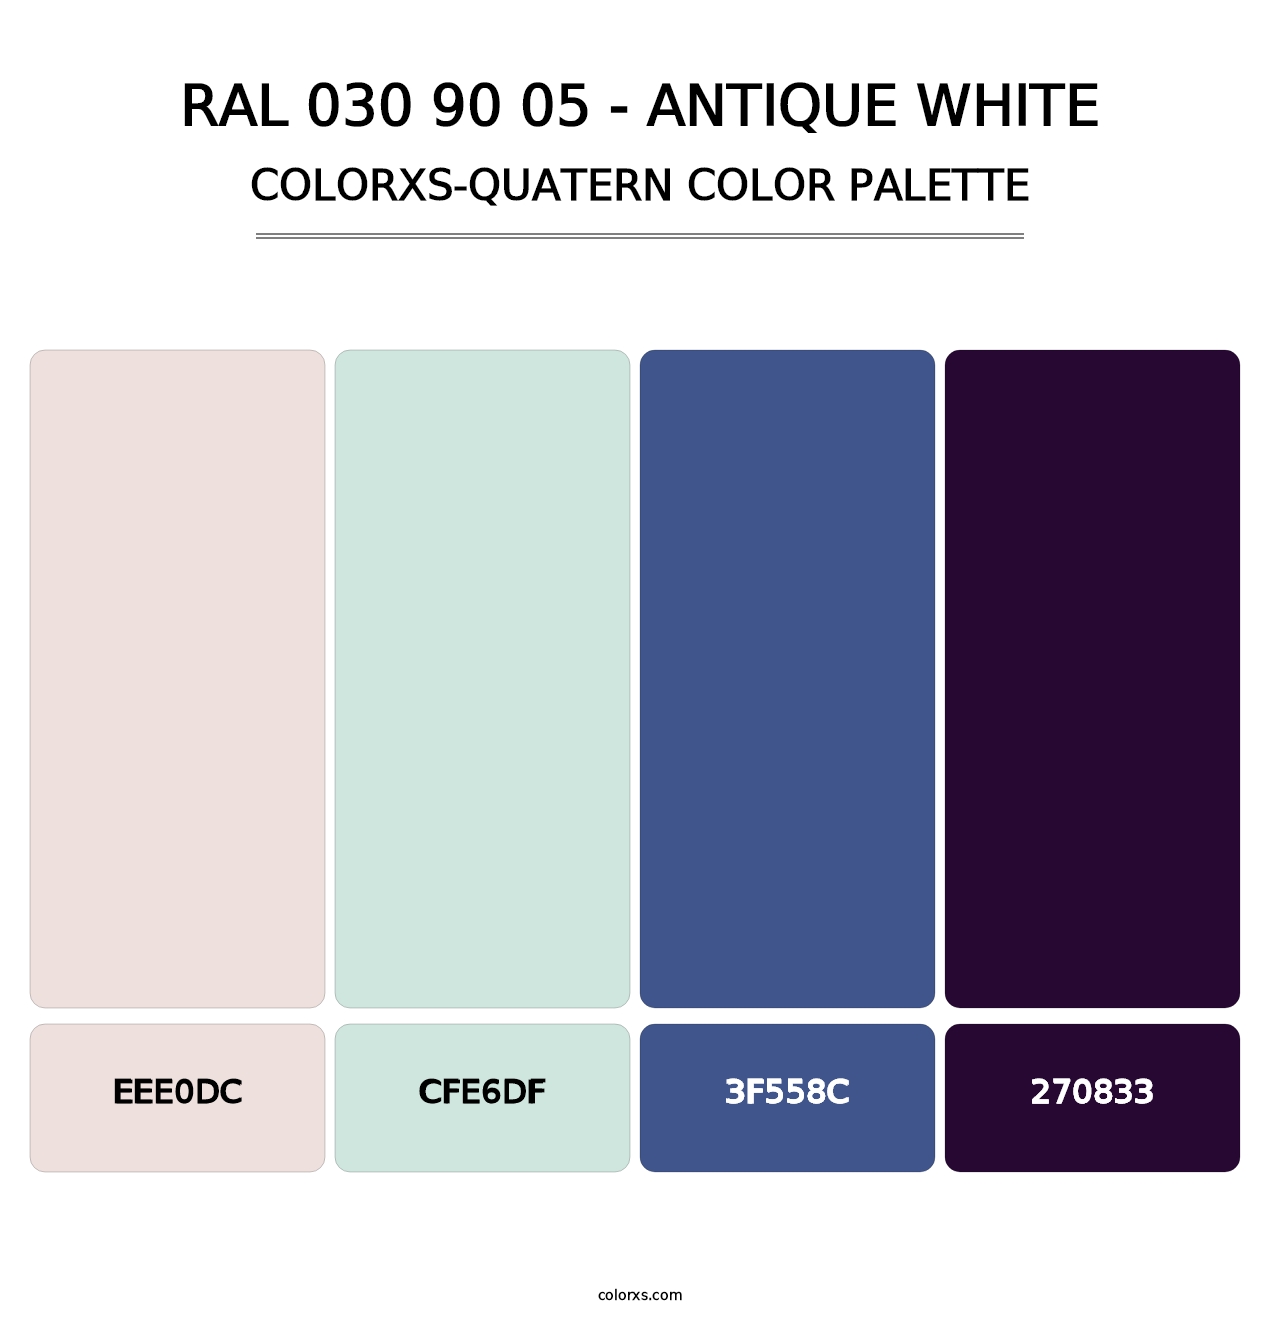 RAL 030 90 05 - Antique White - Colorxs Quatern Palette